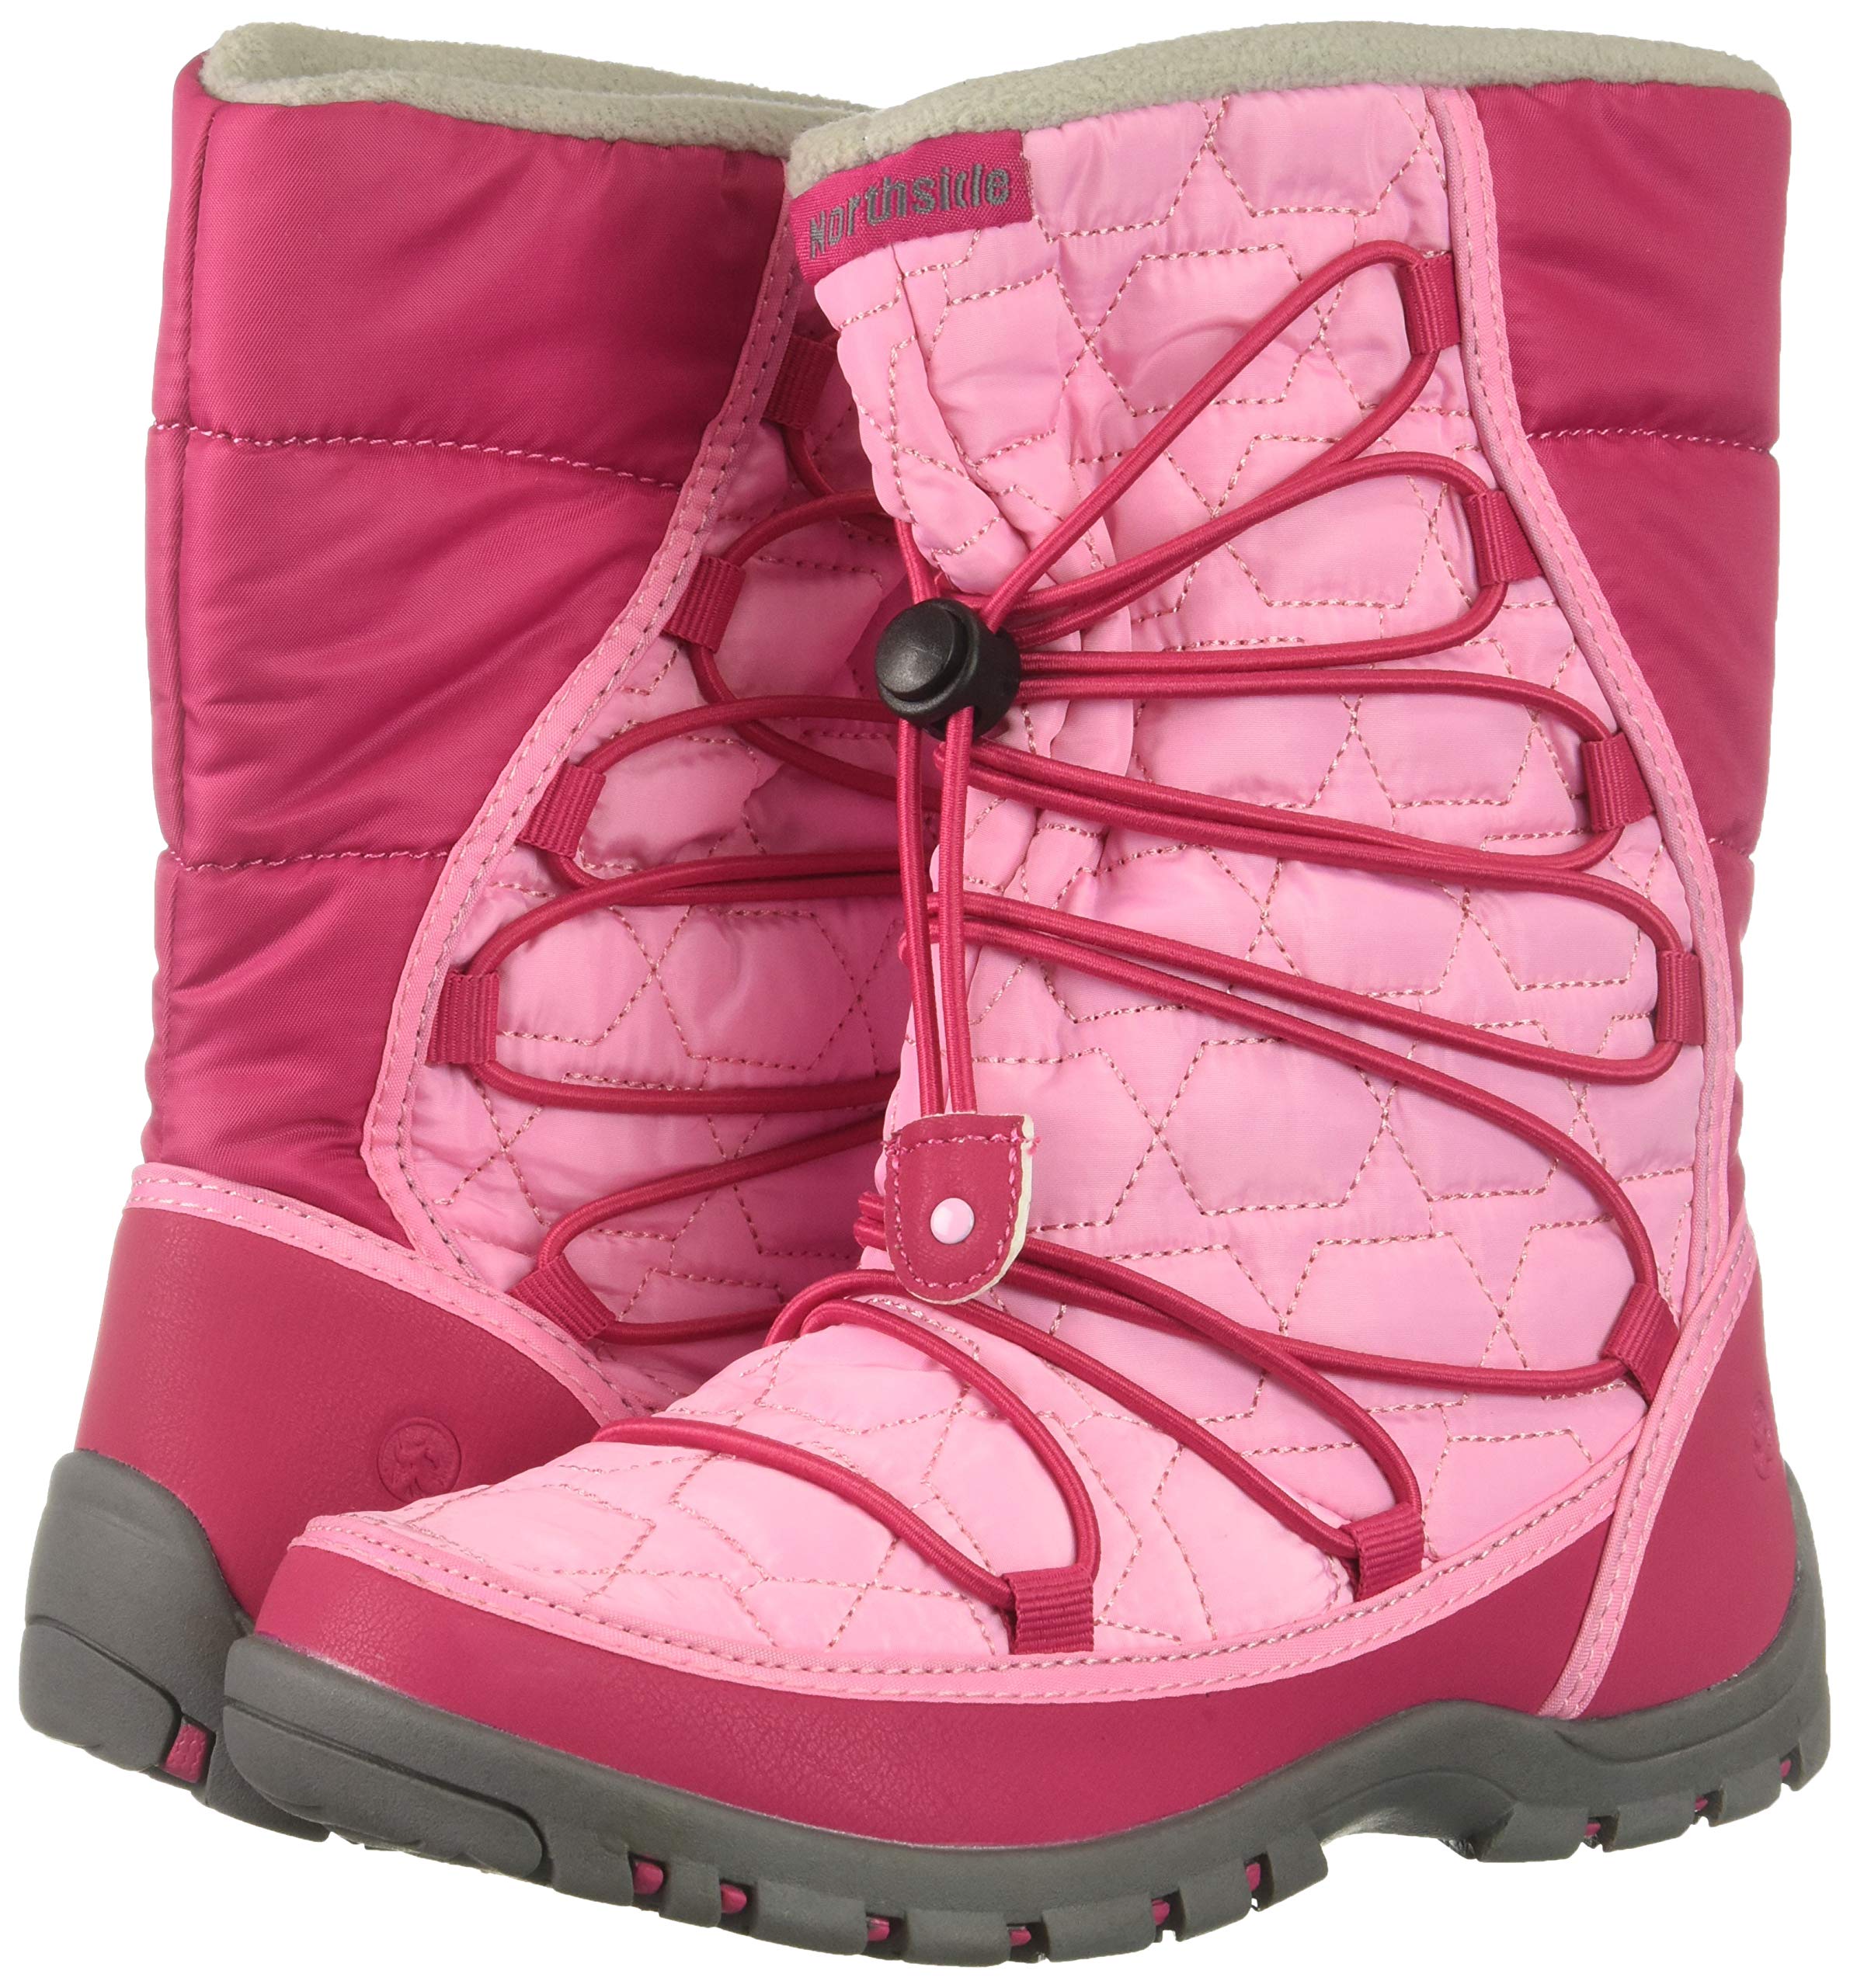 Northside Girls' Starling Snow Boot, Fuchsia/Pink